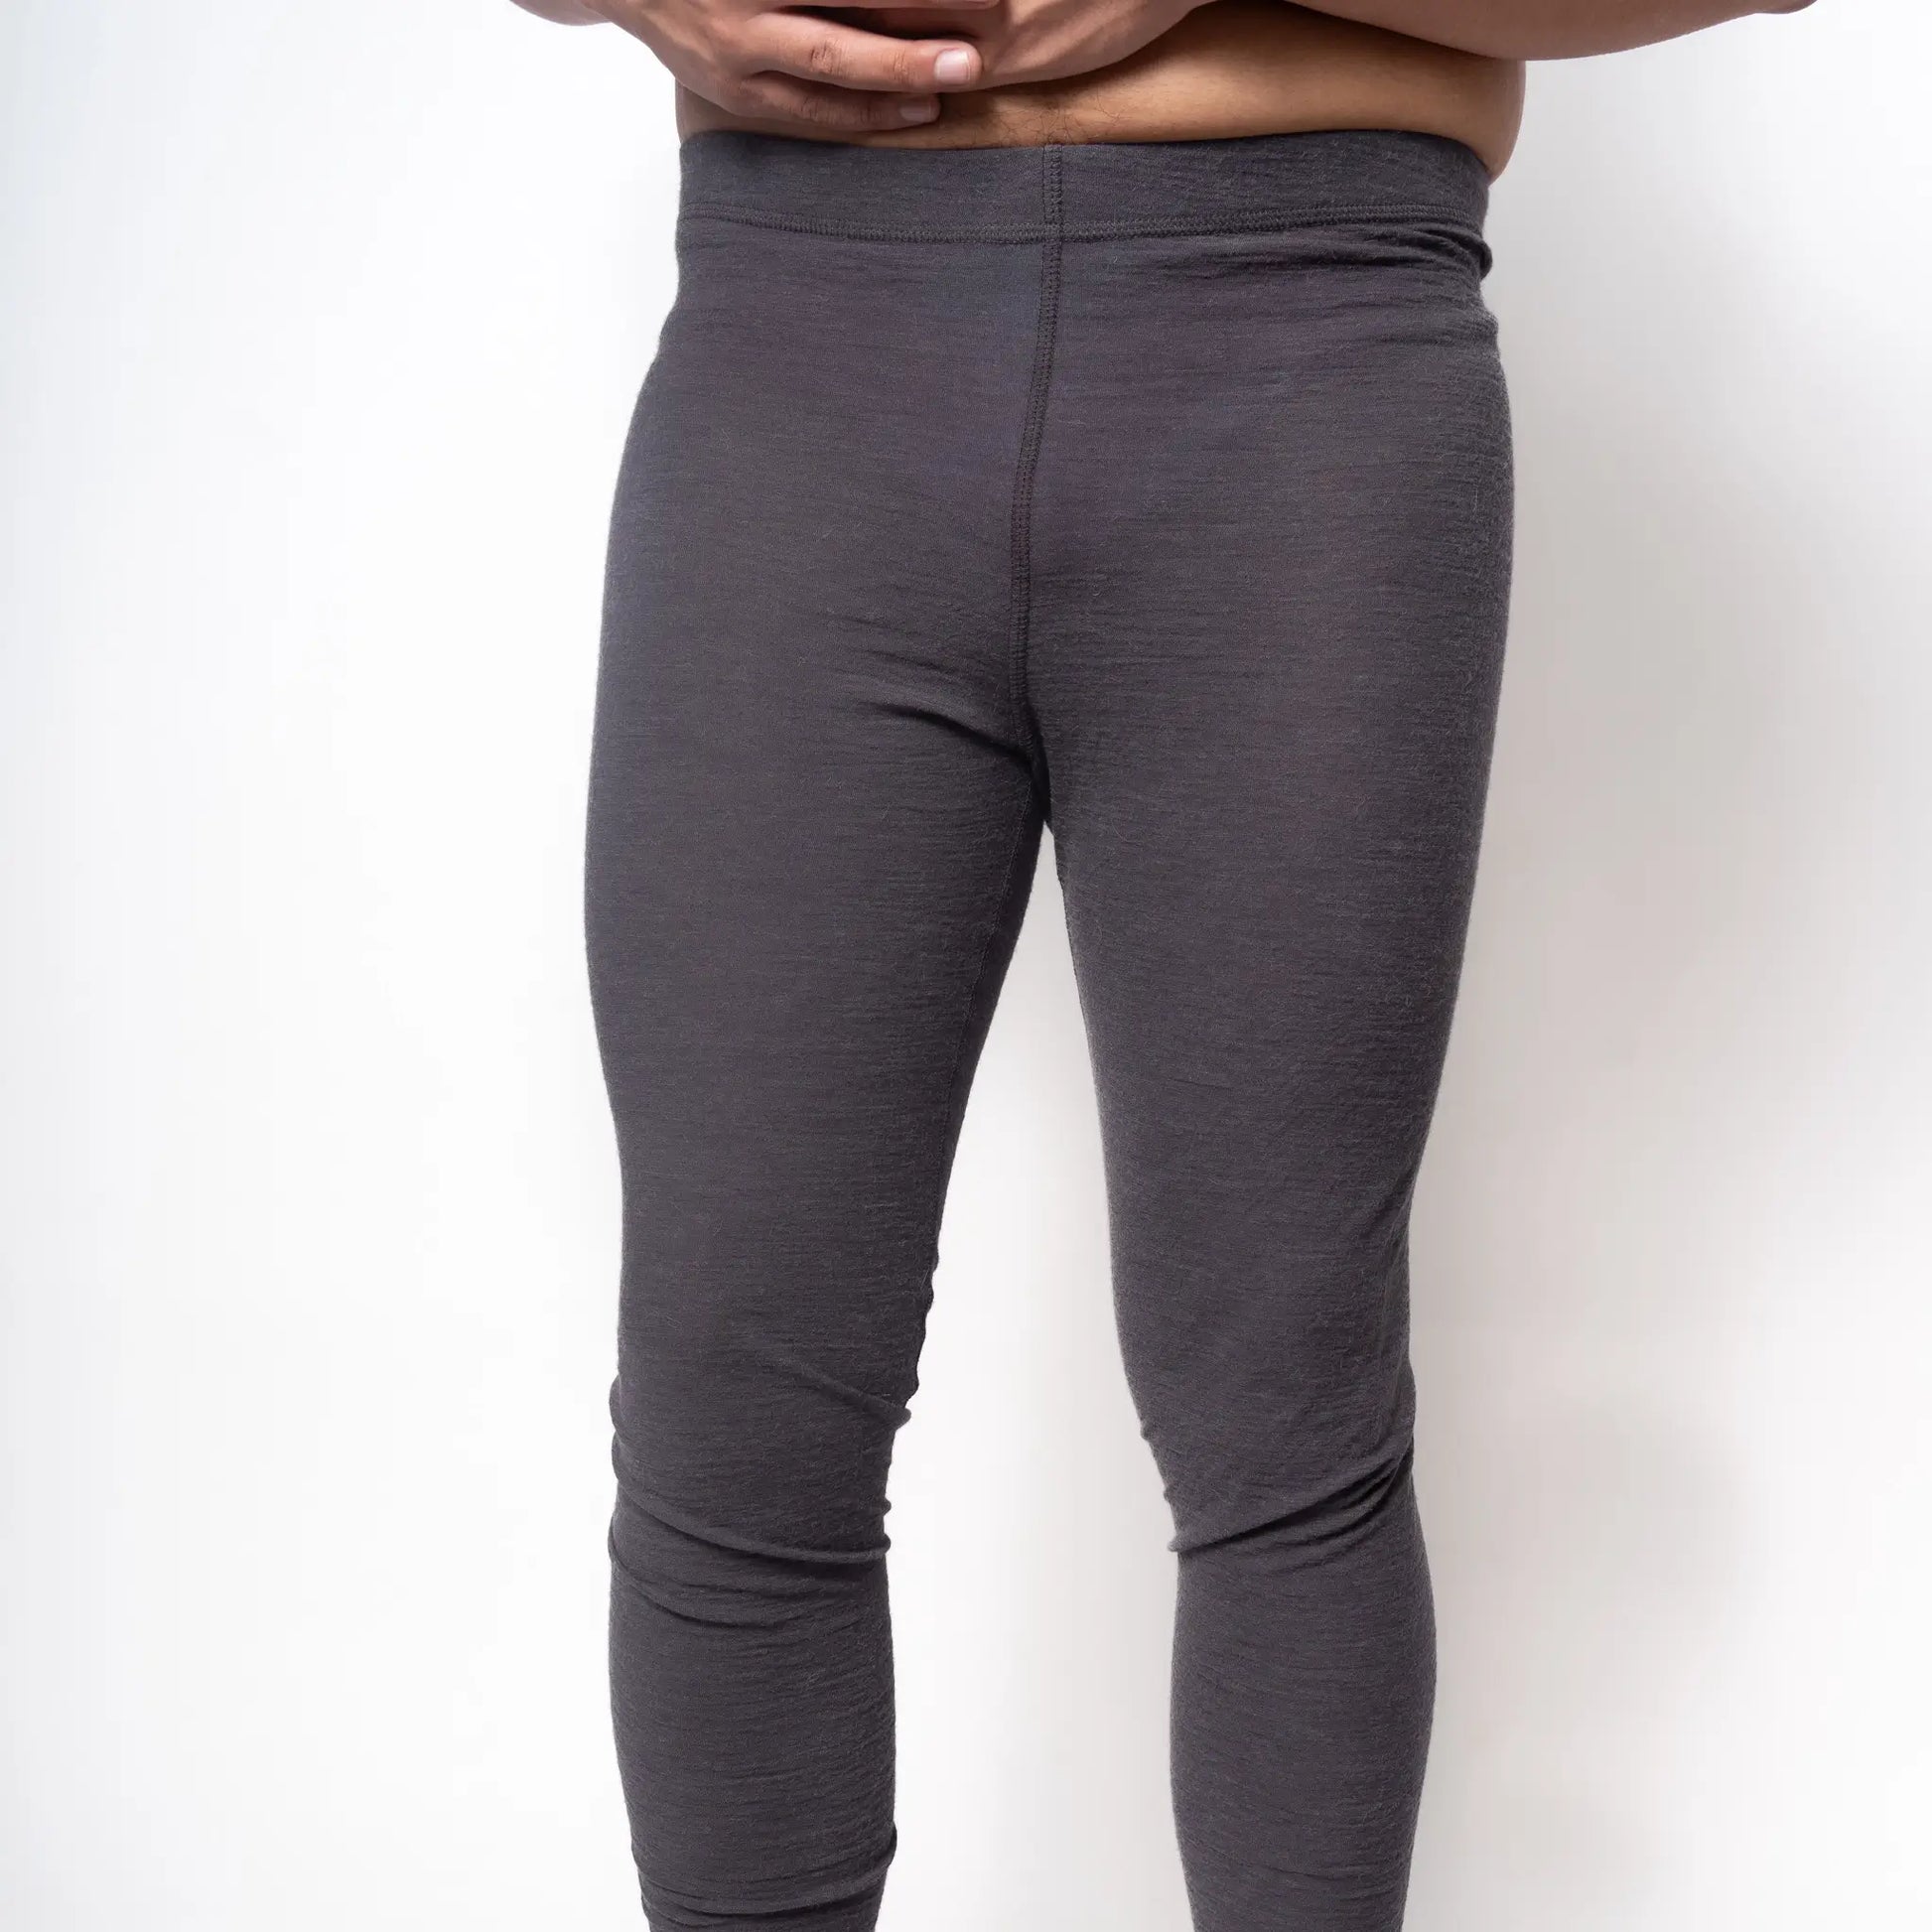 mens leggings ultralight160 most comfortable color gray